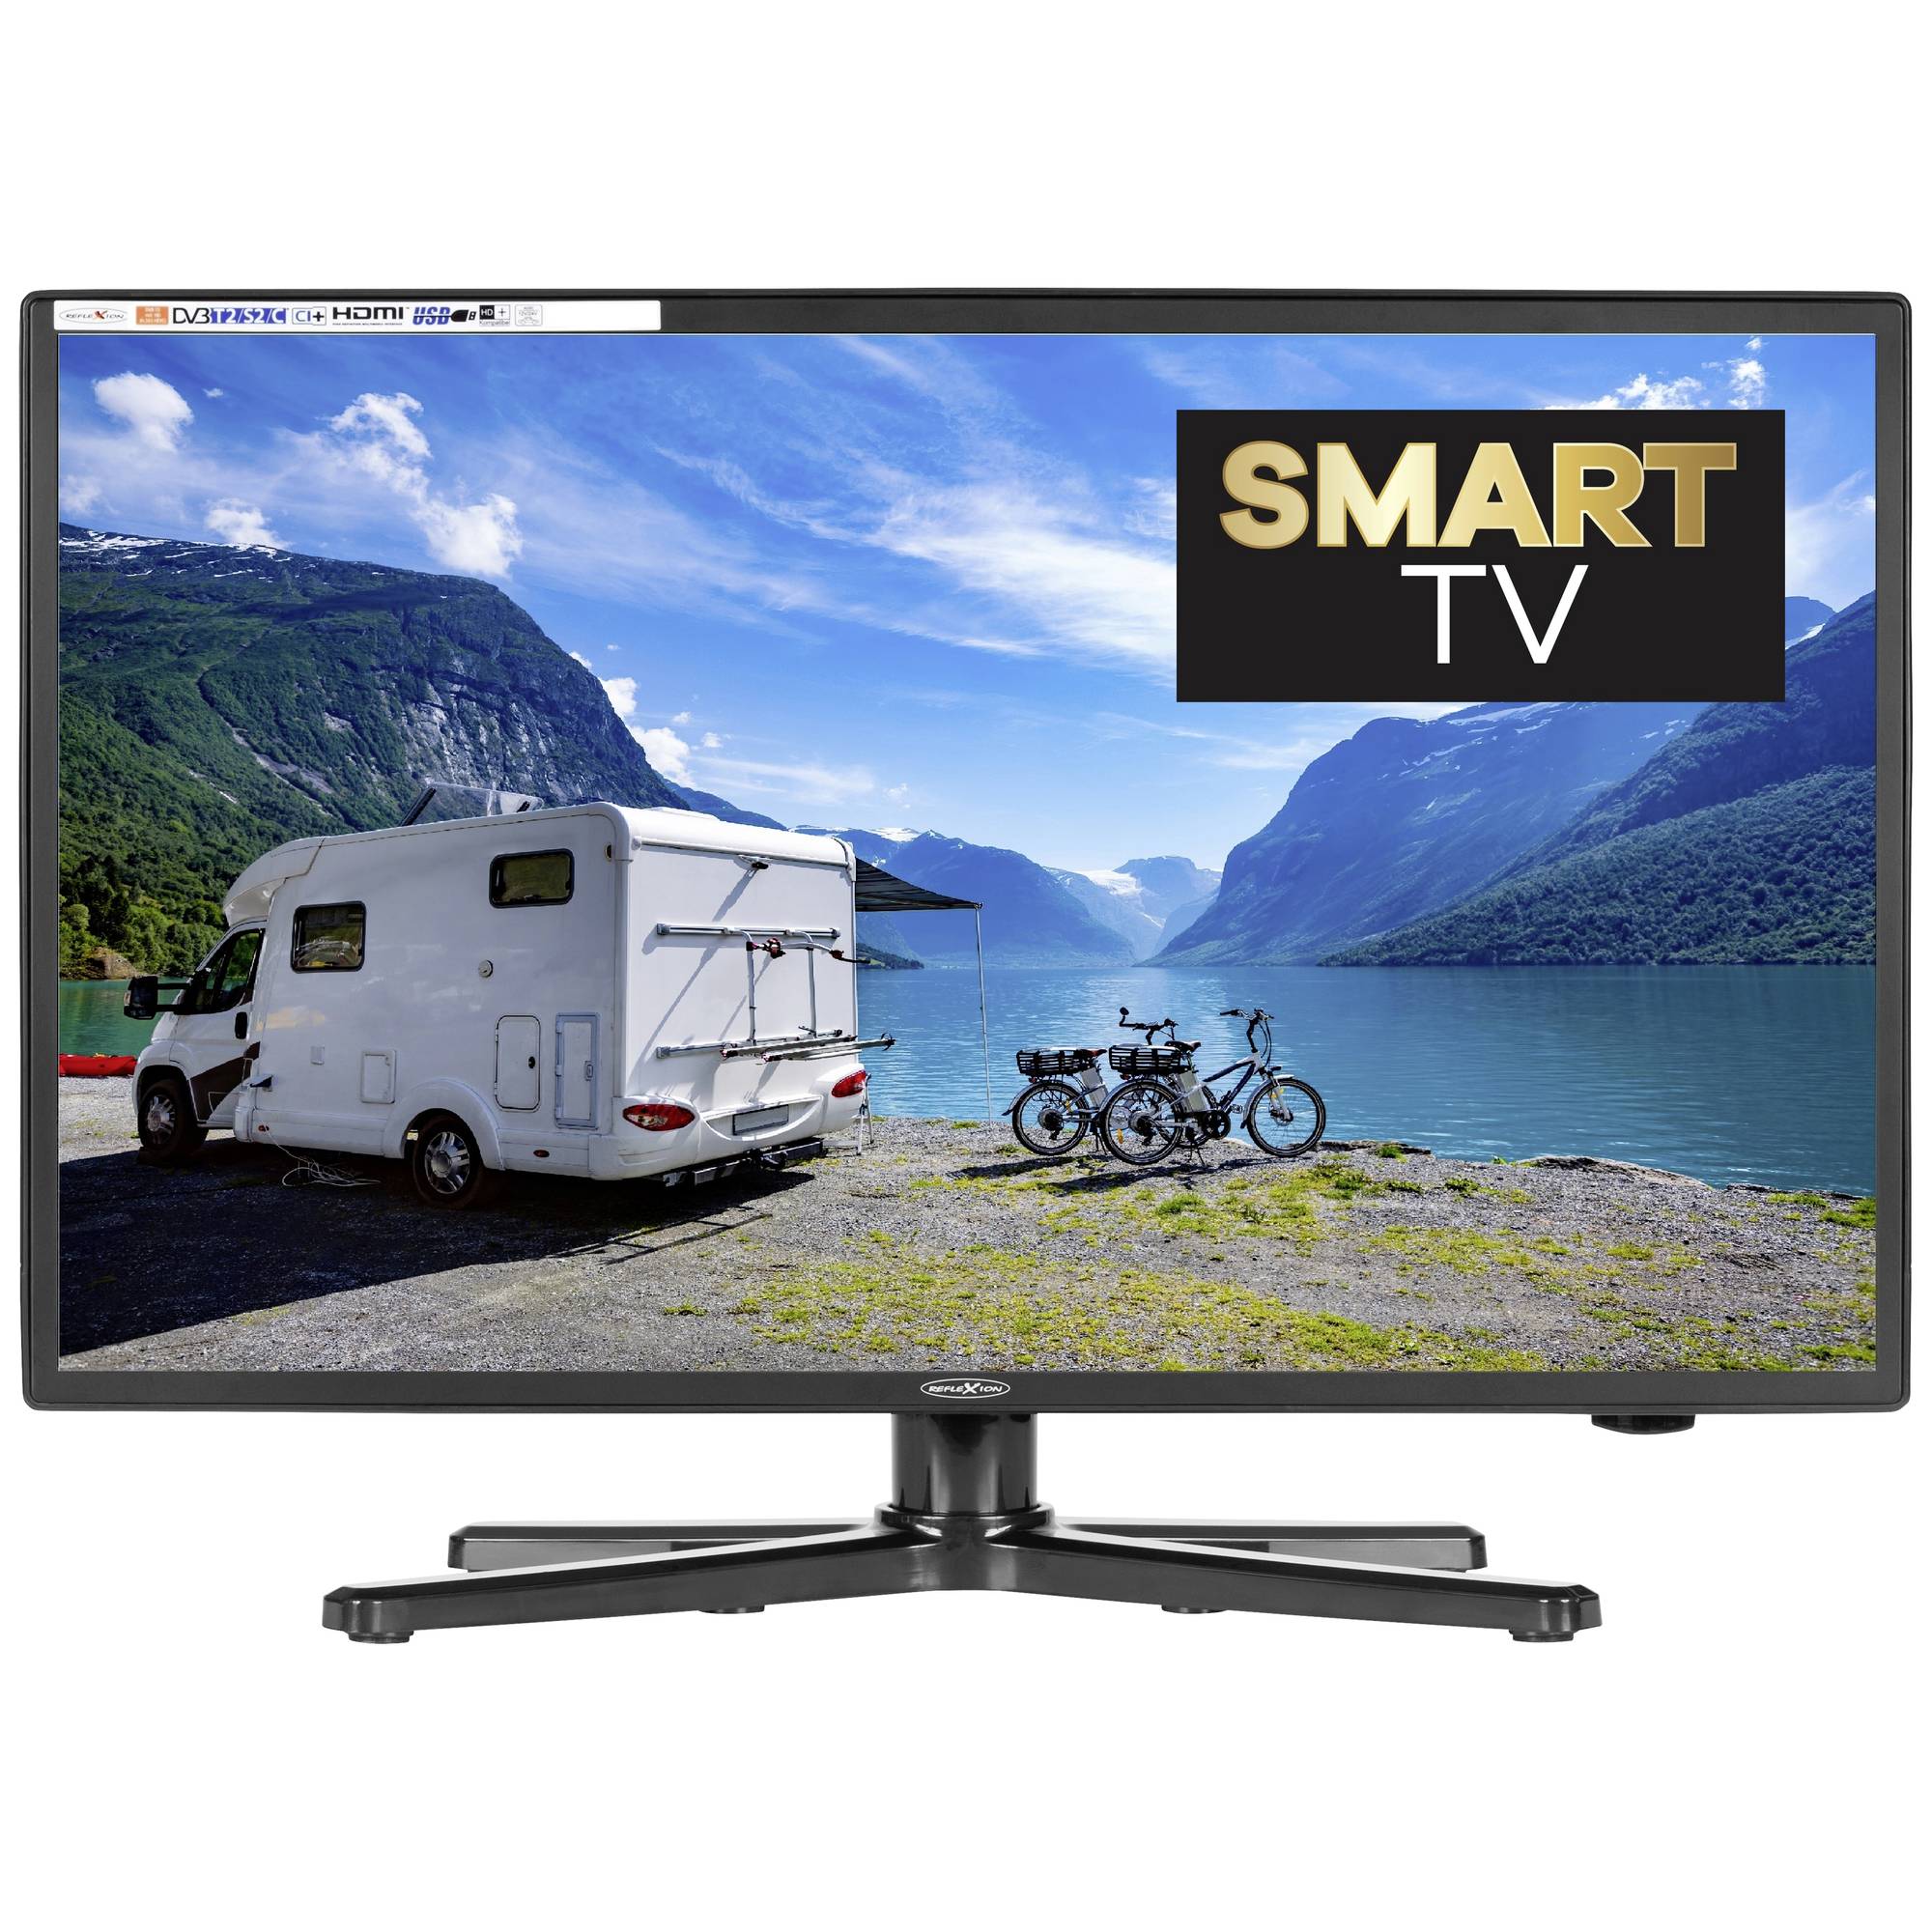 Reflexion 60 cm LED-Fernseher, 24 Zoll, Auflösung: 1.920x1.080 Pixel, Full HD, H.265 HEVC, DVB-T2 HD